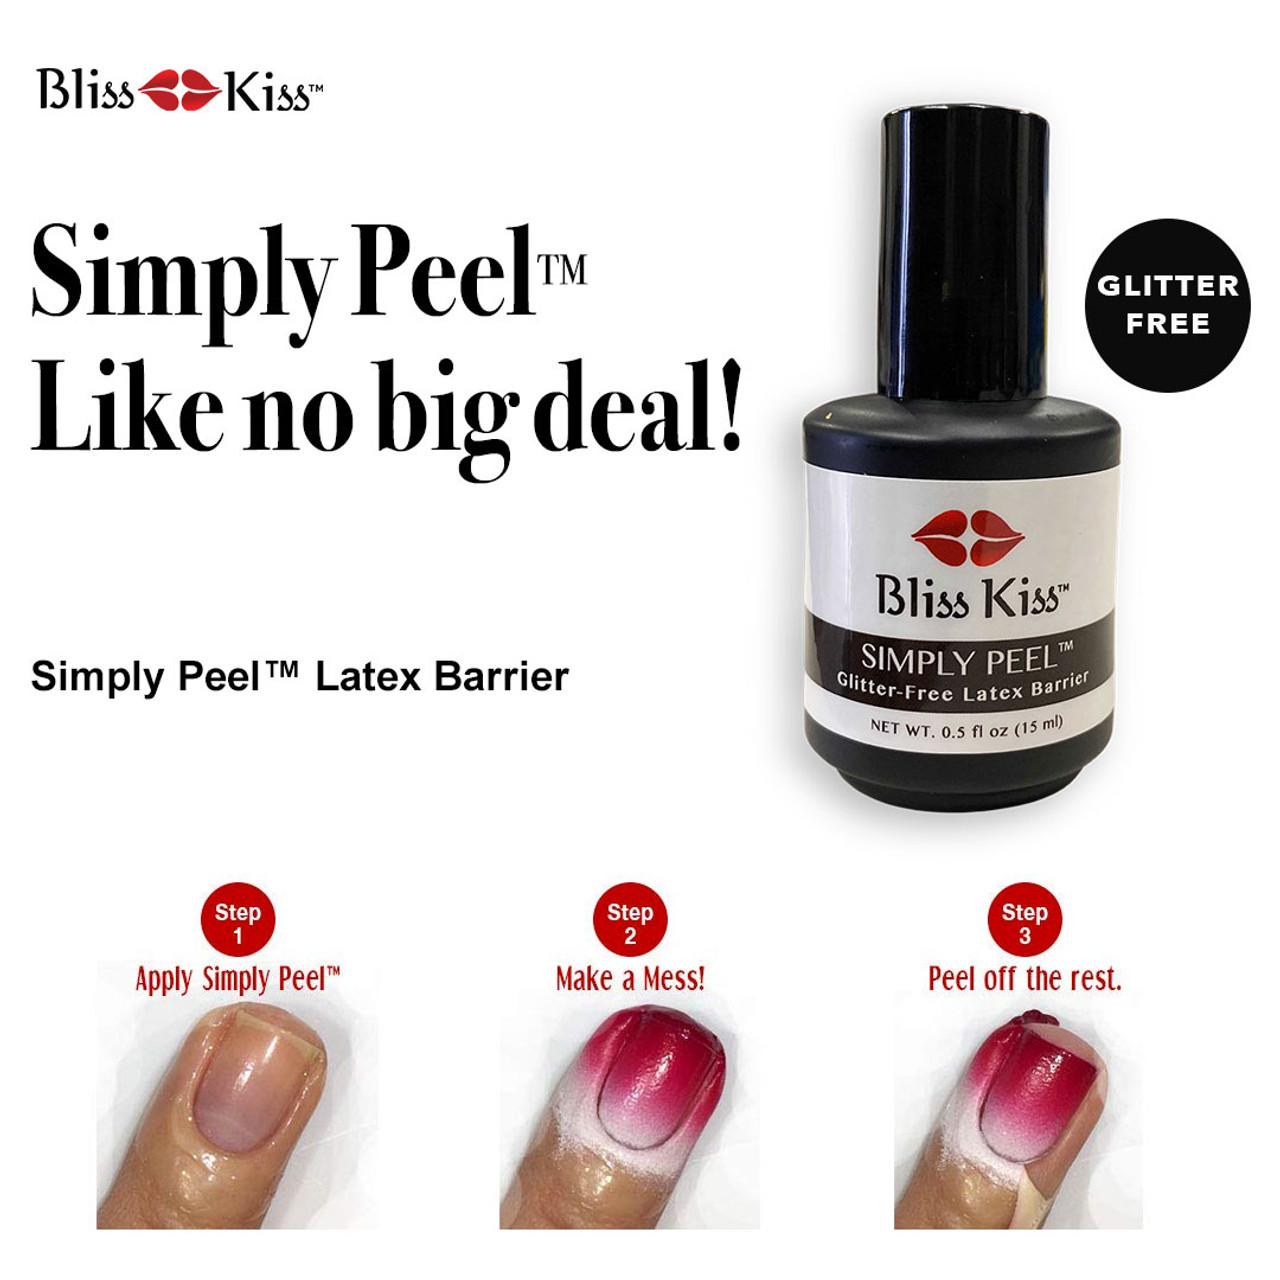 Simply Peel™ Liquid Latex Barrier - Glitter Free - New Black Bottle!